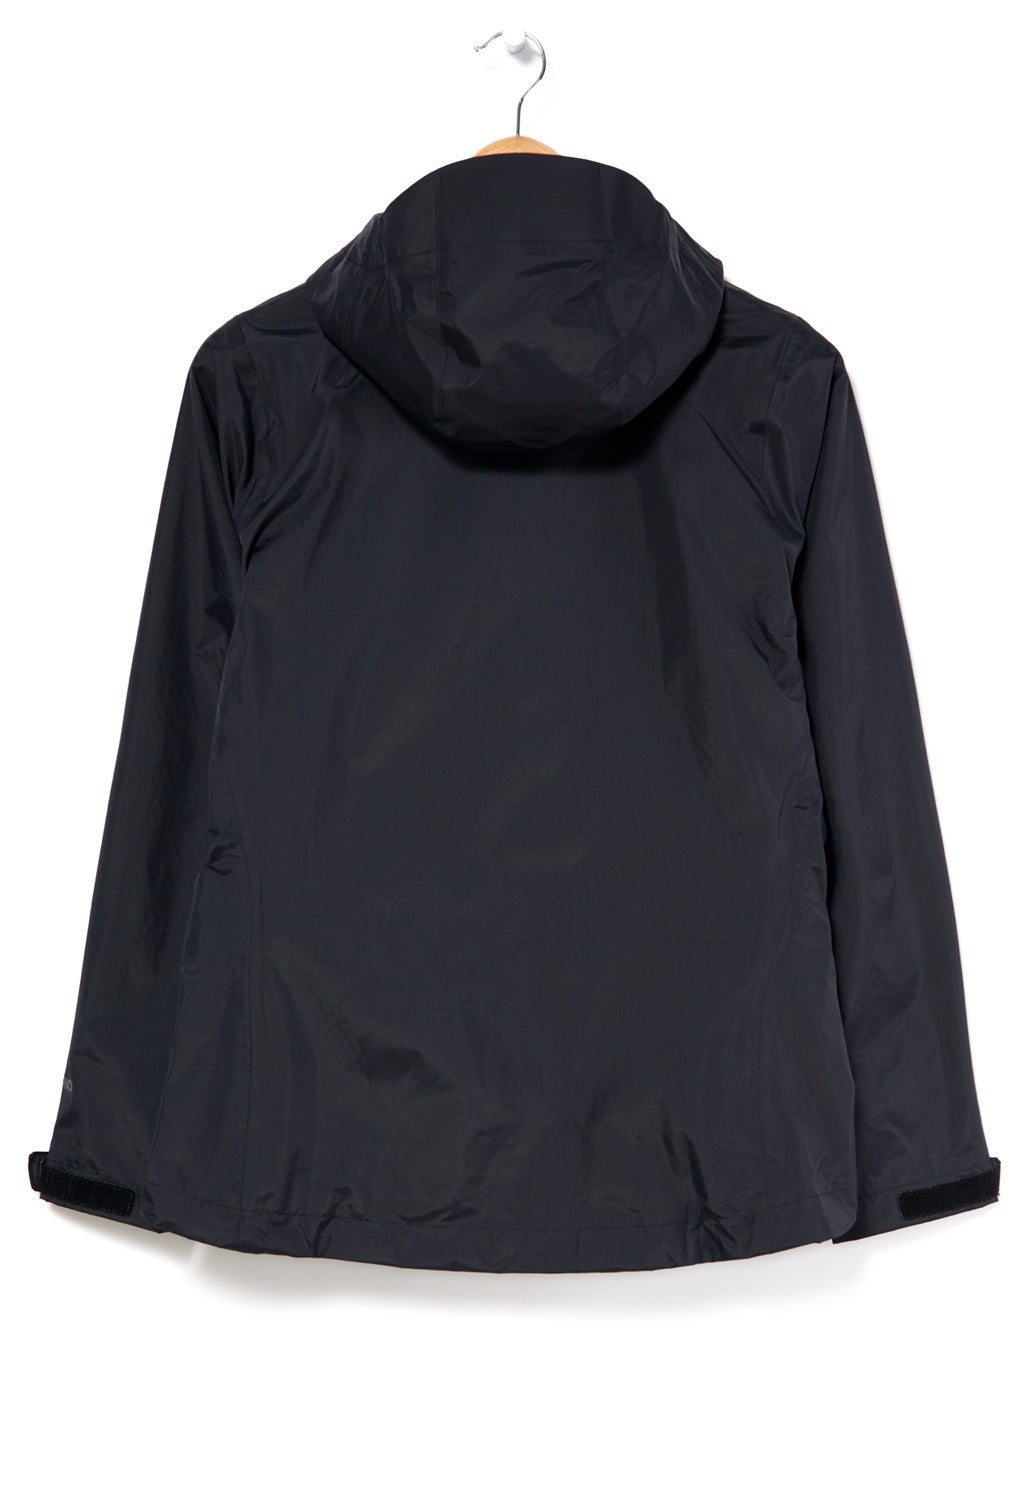 Patagonia Torrentshell 3L Women's Jacket - Black